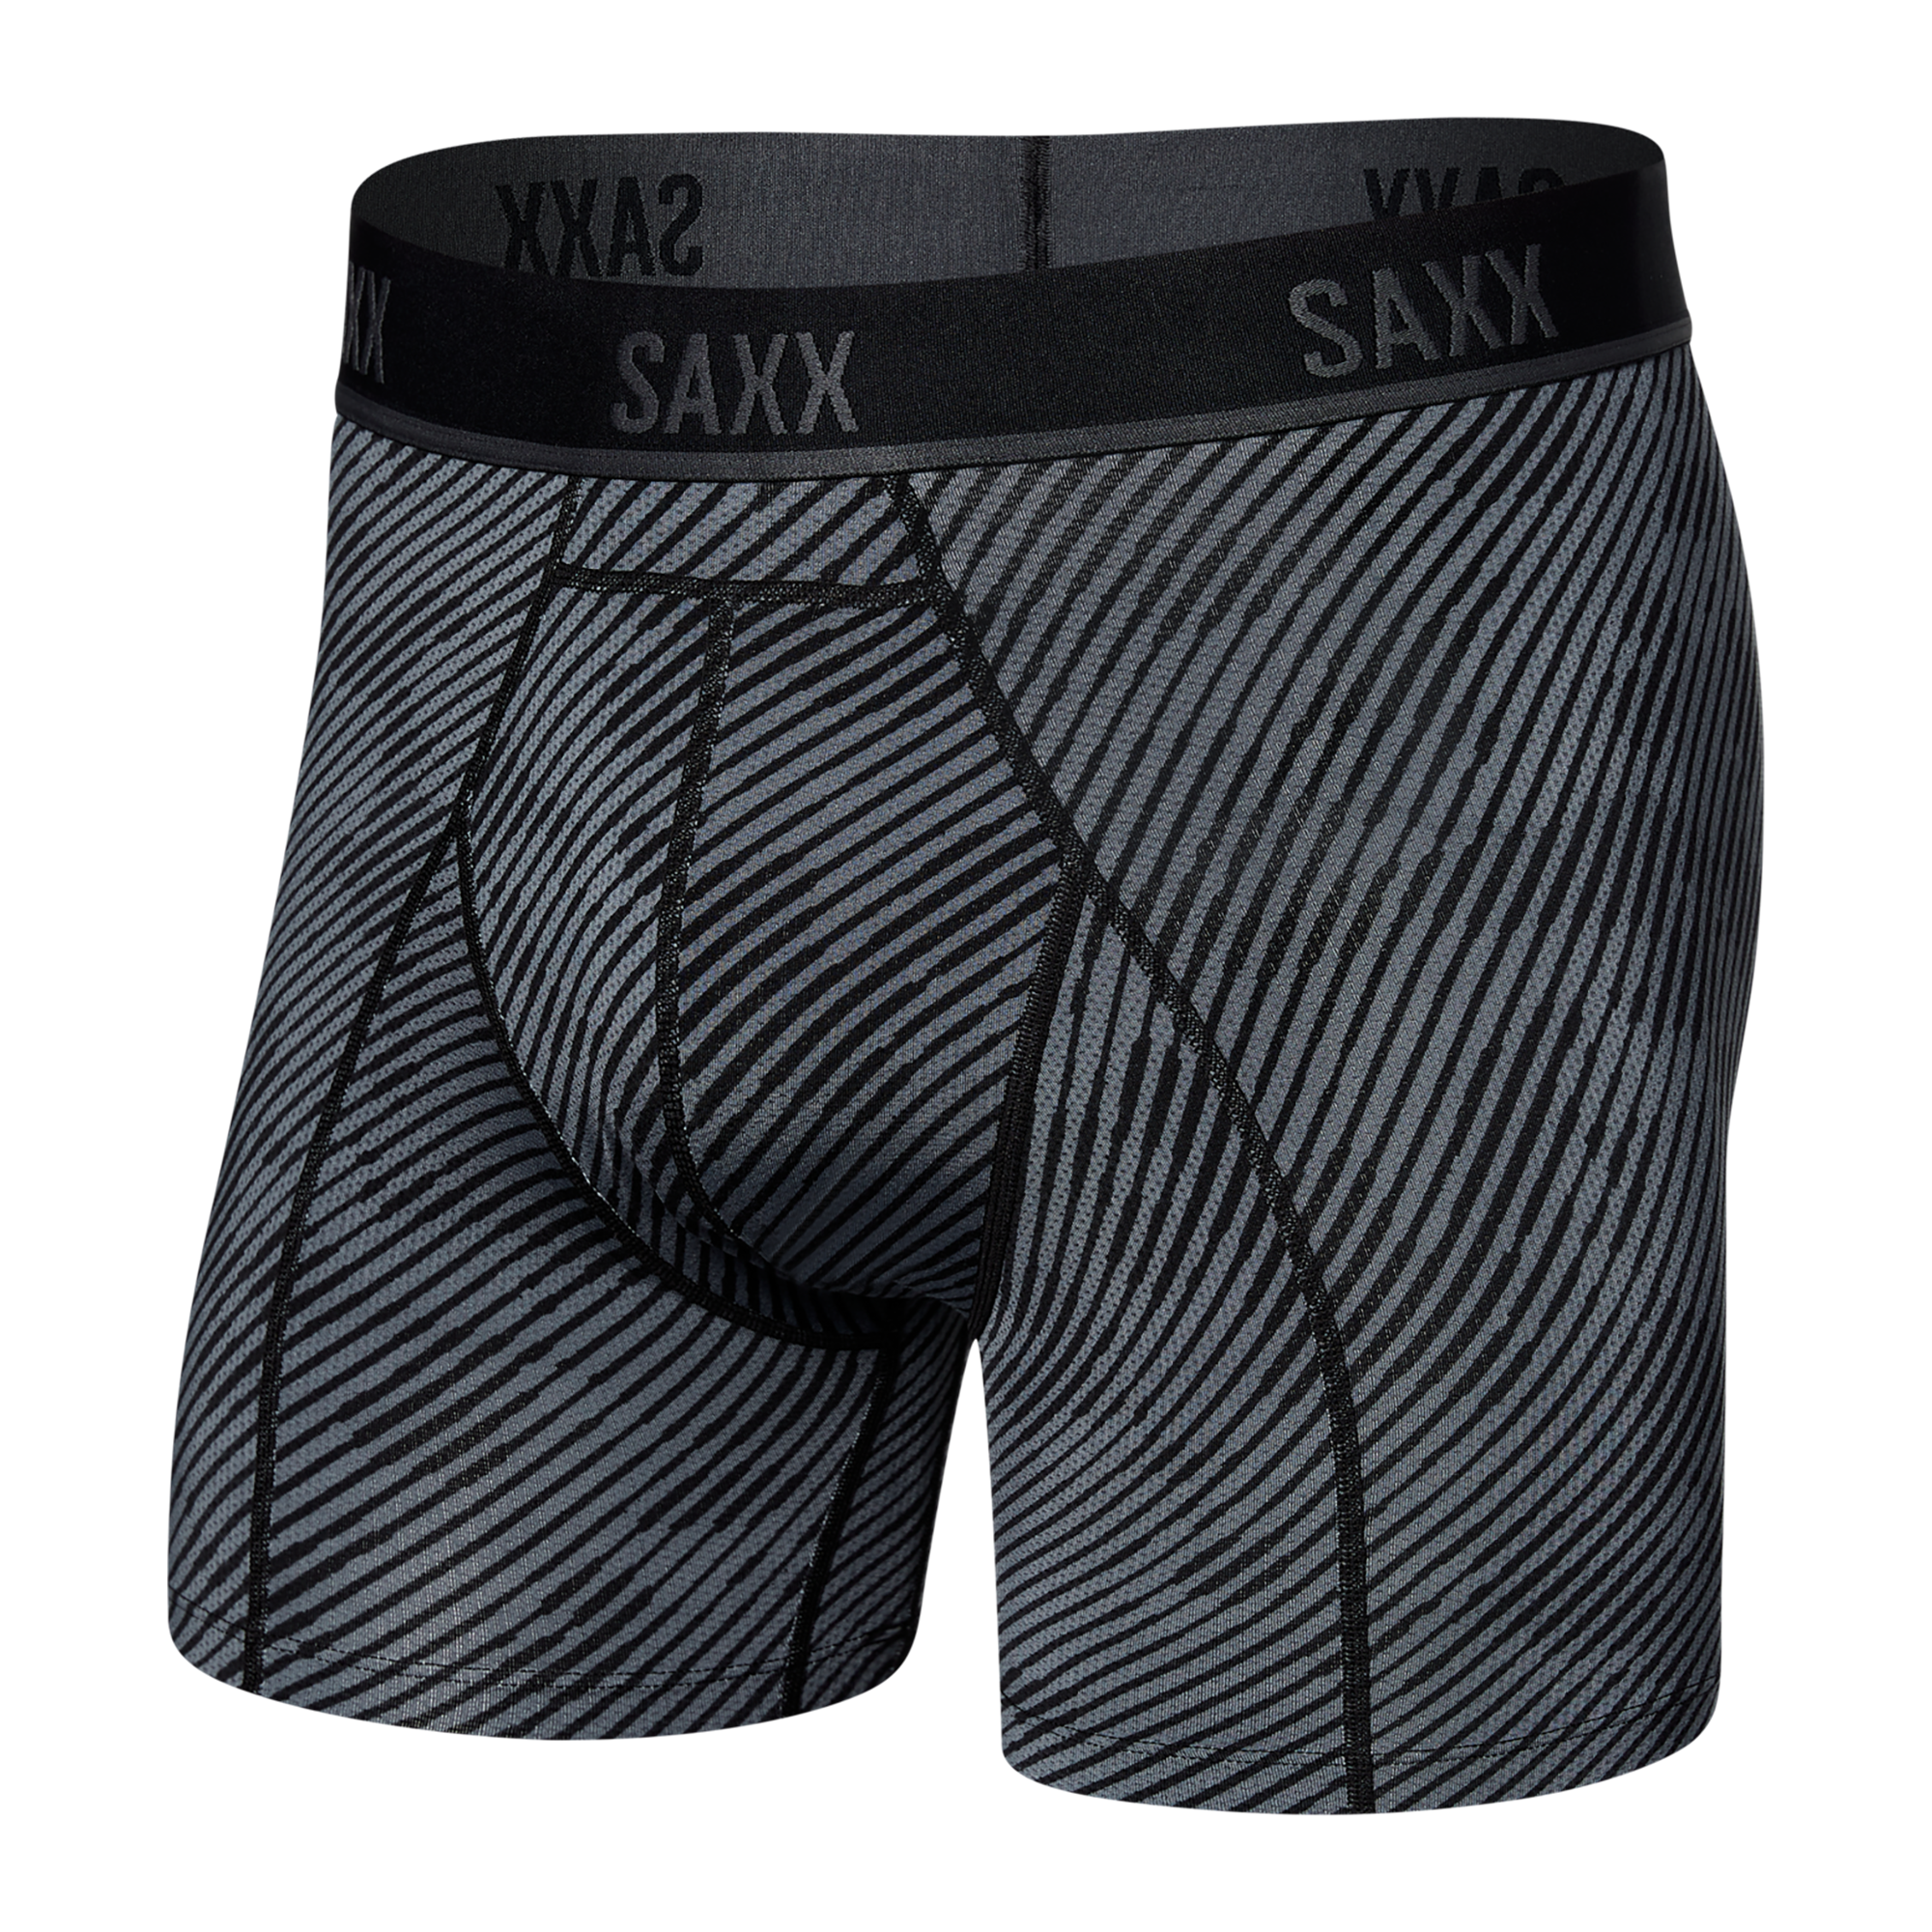 Balance Tech Performance Boxer Brief Soccer Keeper Theme Underwear Large NWT